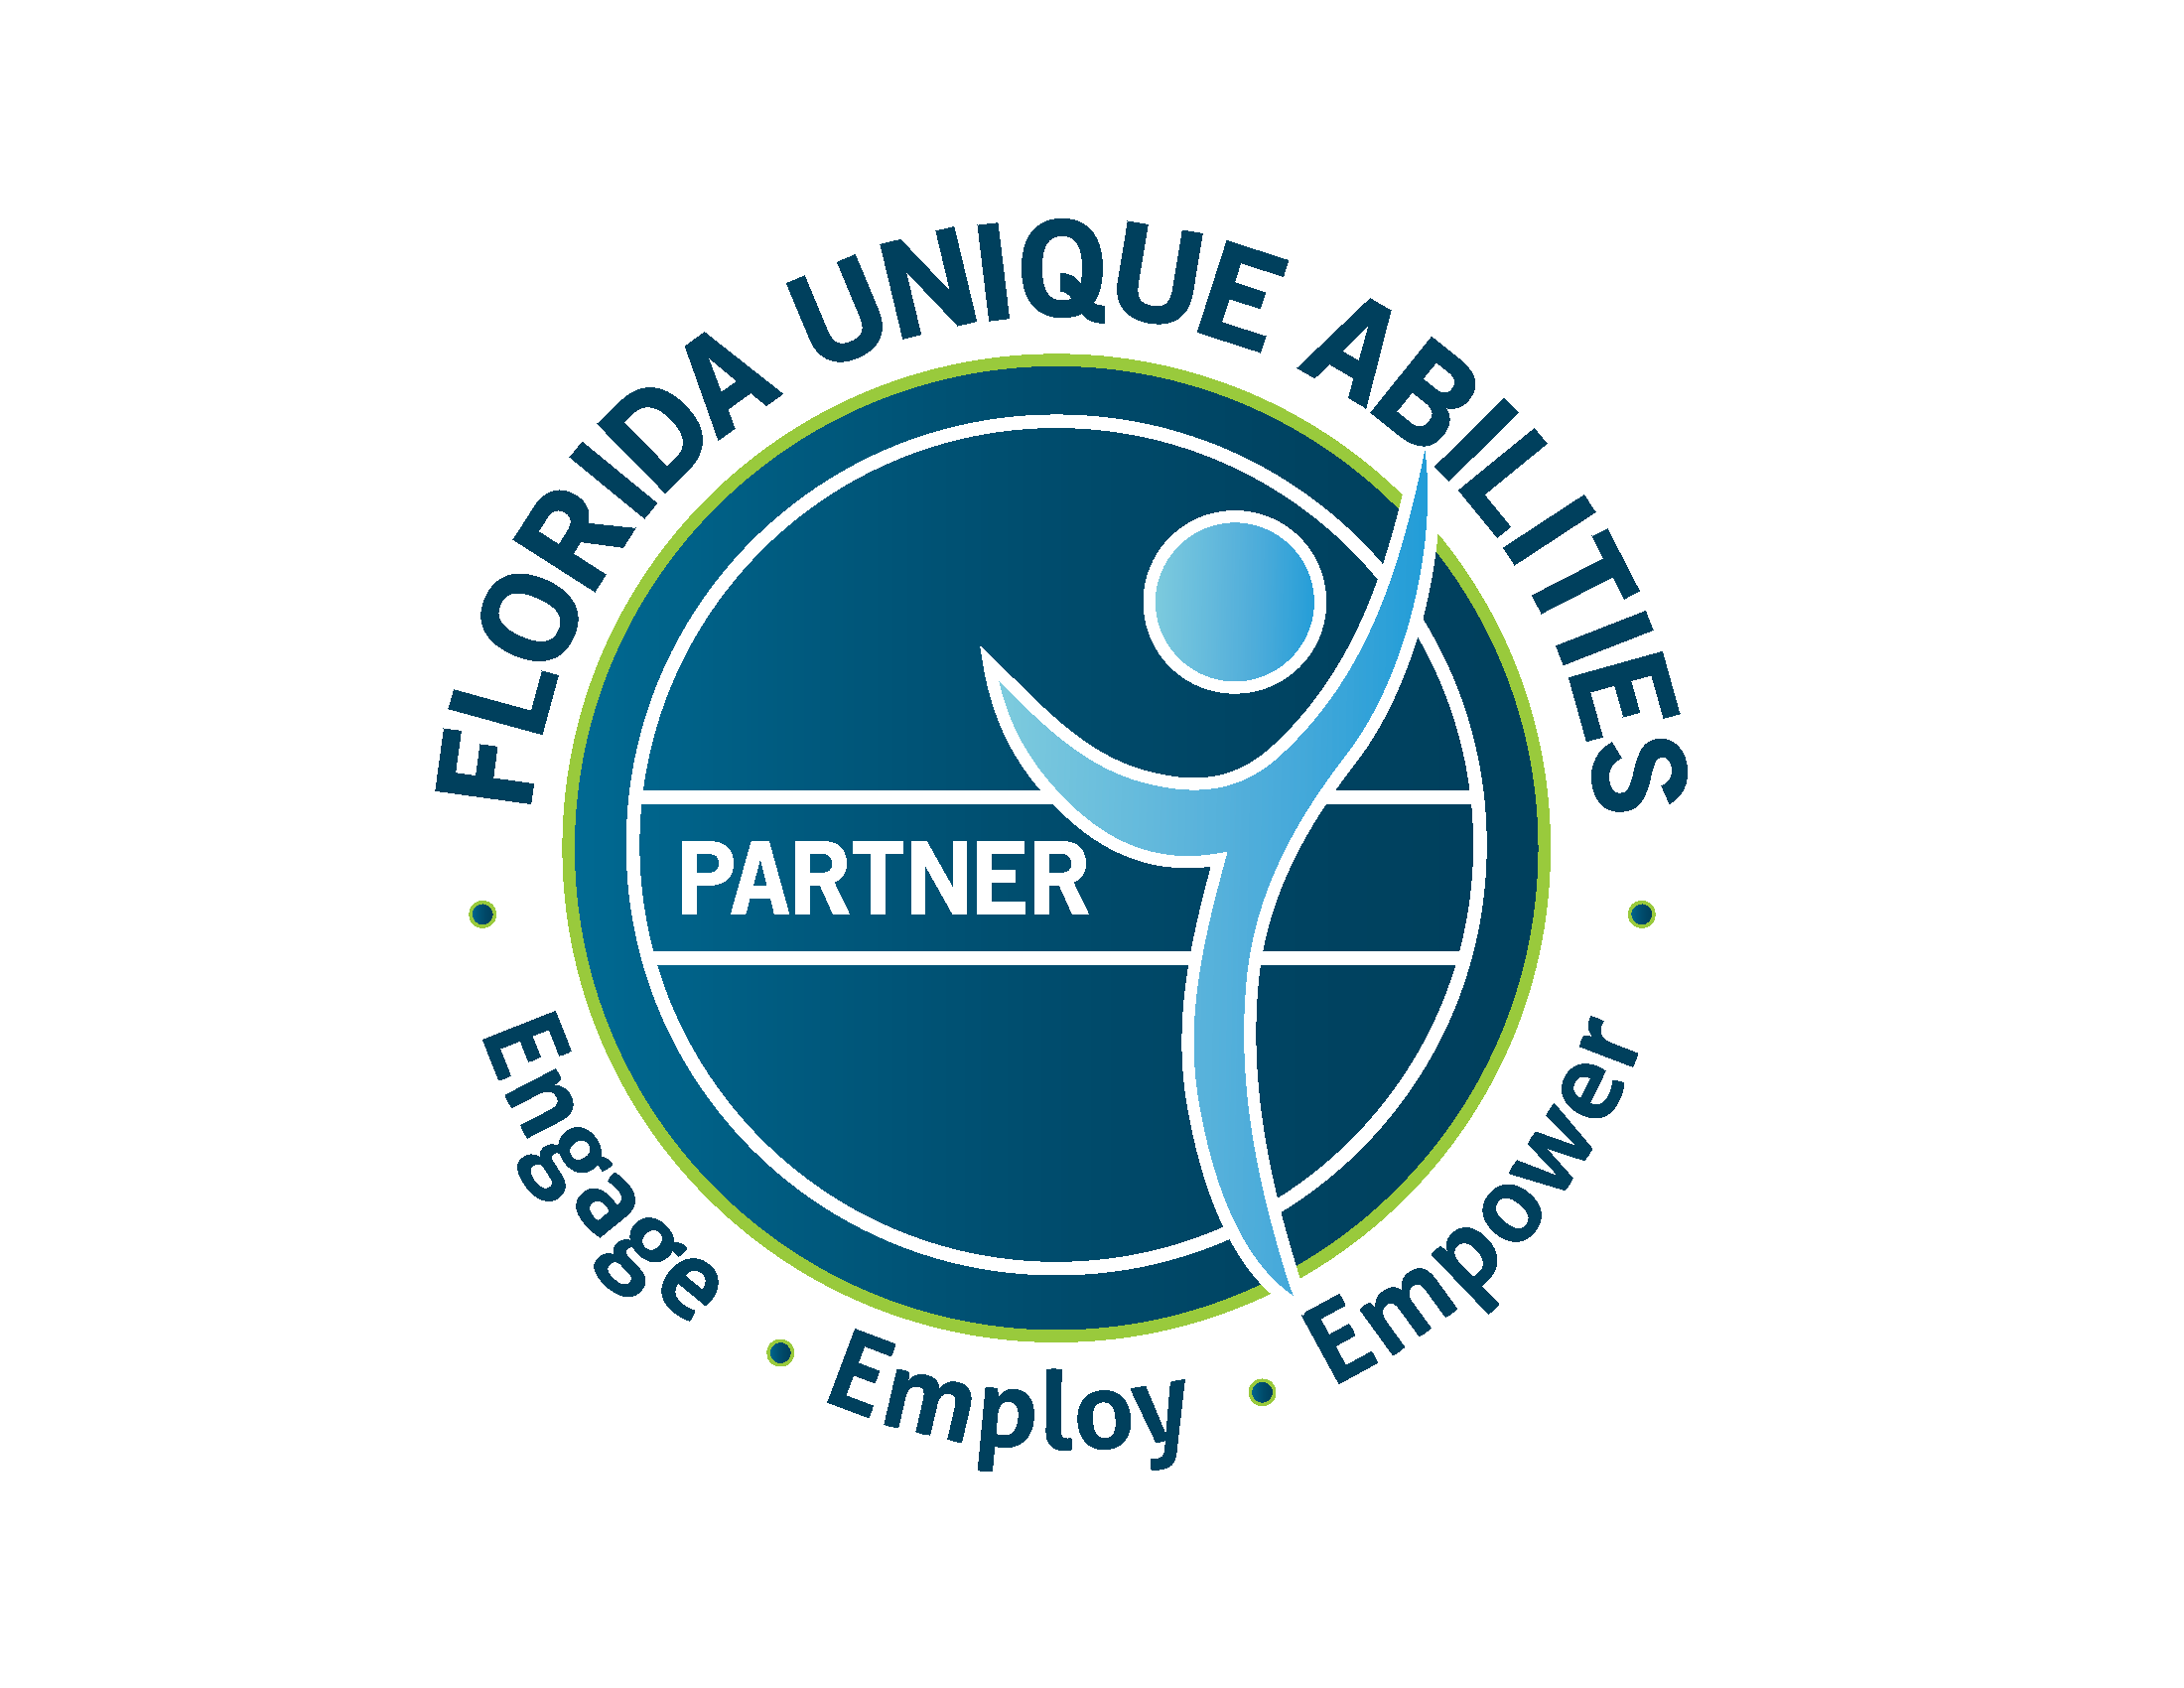 Florida Unique Abilities Partner - Engage - Employ - Empower